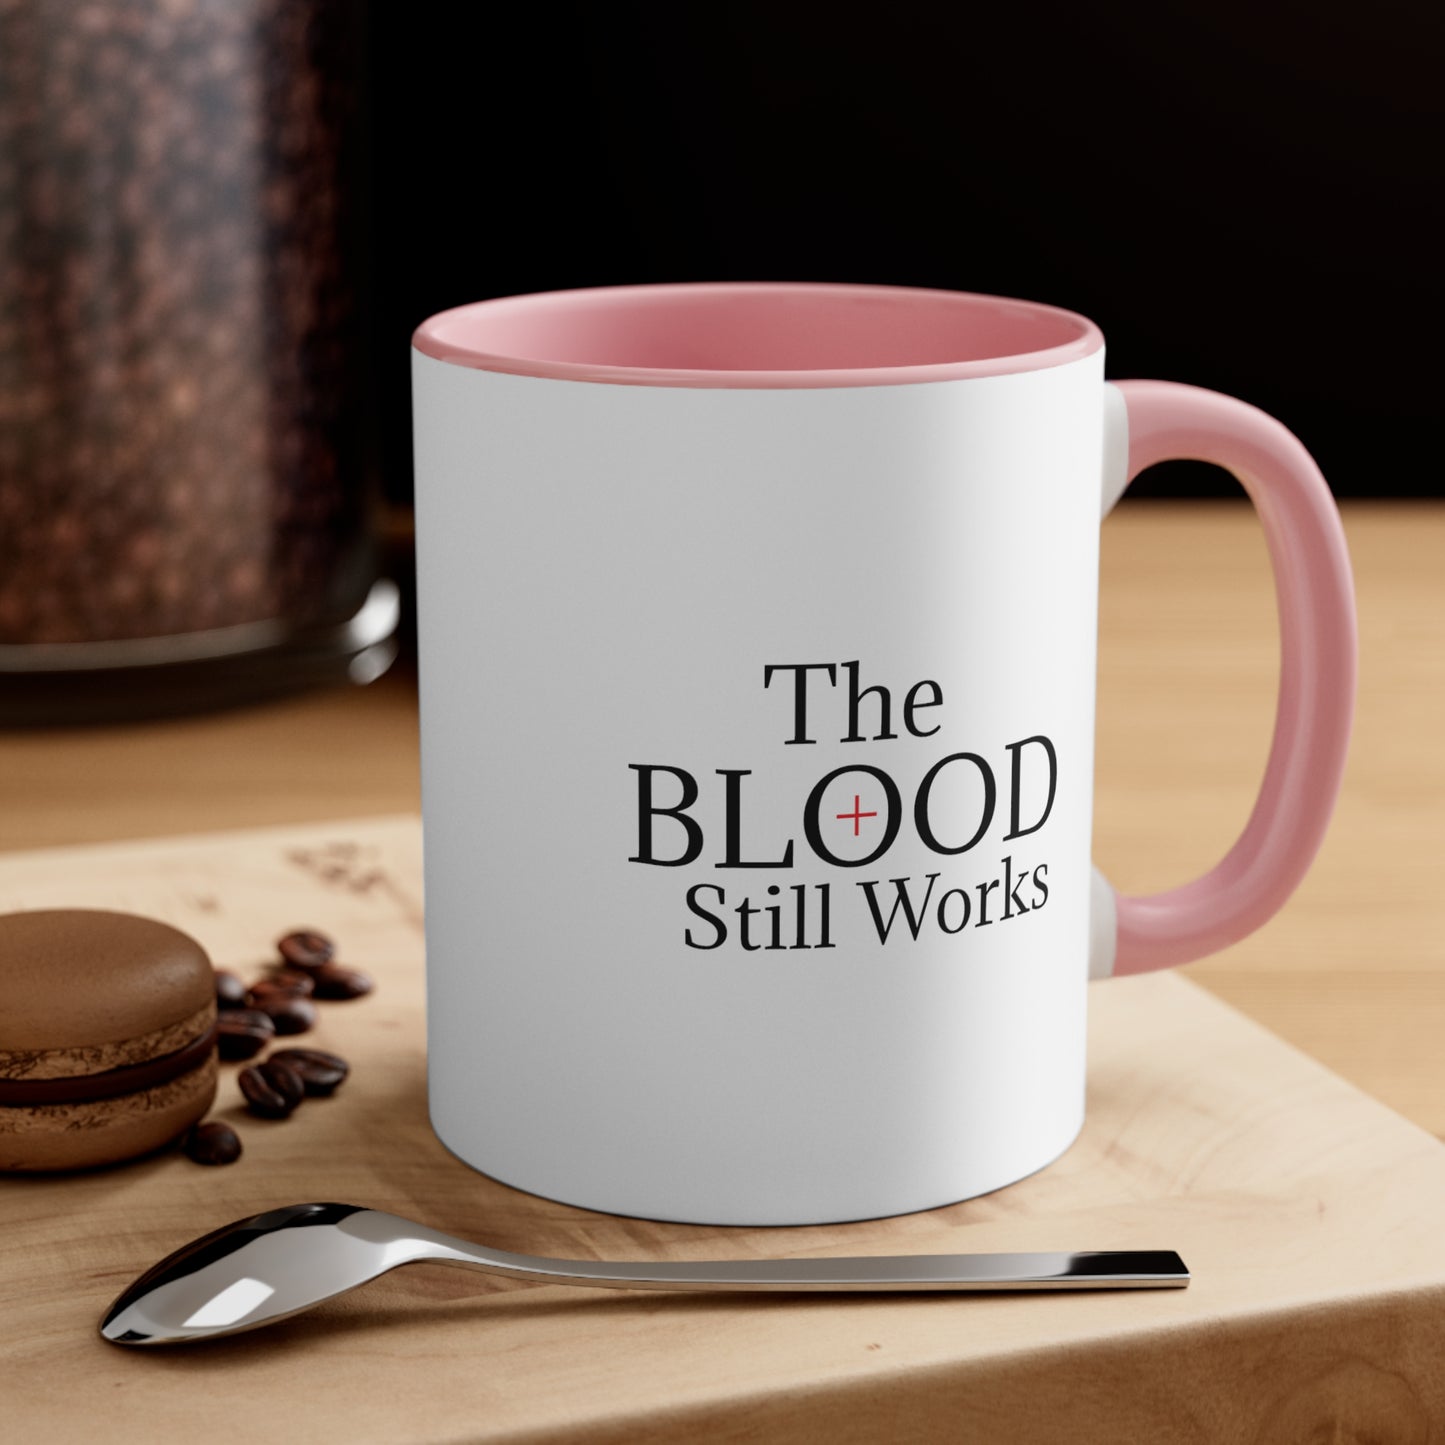 The Blood Still Works Mug Christian Ceramic Mug, Easter Mug Jesus Mugs Accent Coffee Mug, 11oz